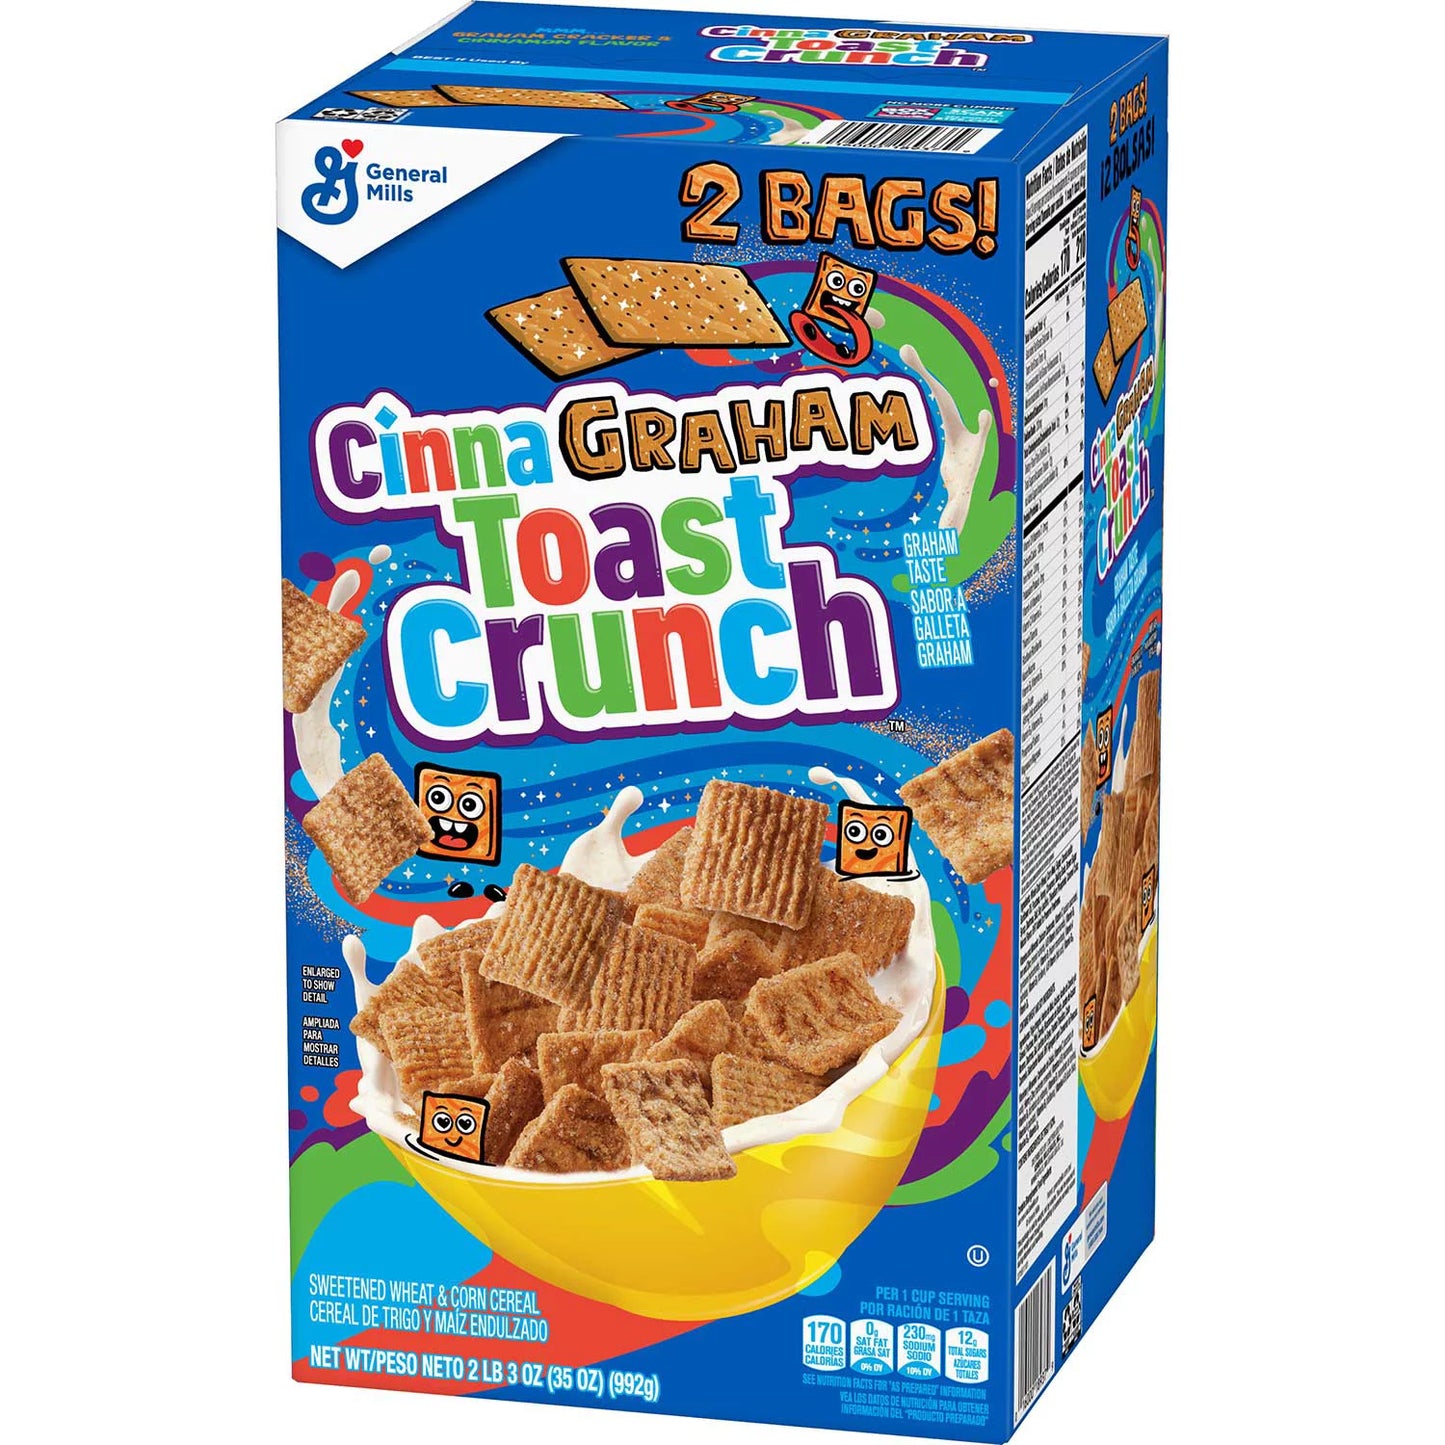 Cinnagraham Toast Crunch Breakfast Cereal (2 pk.)